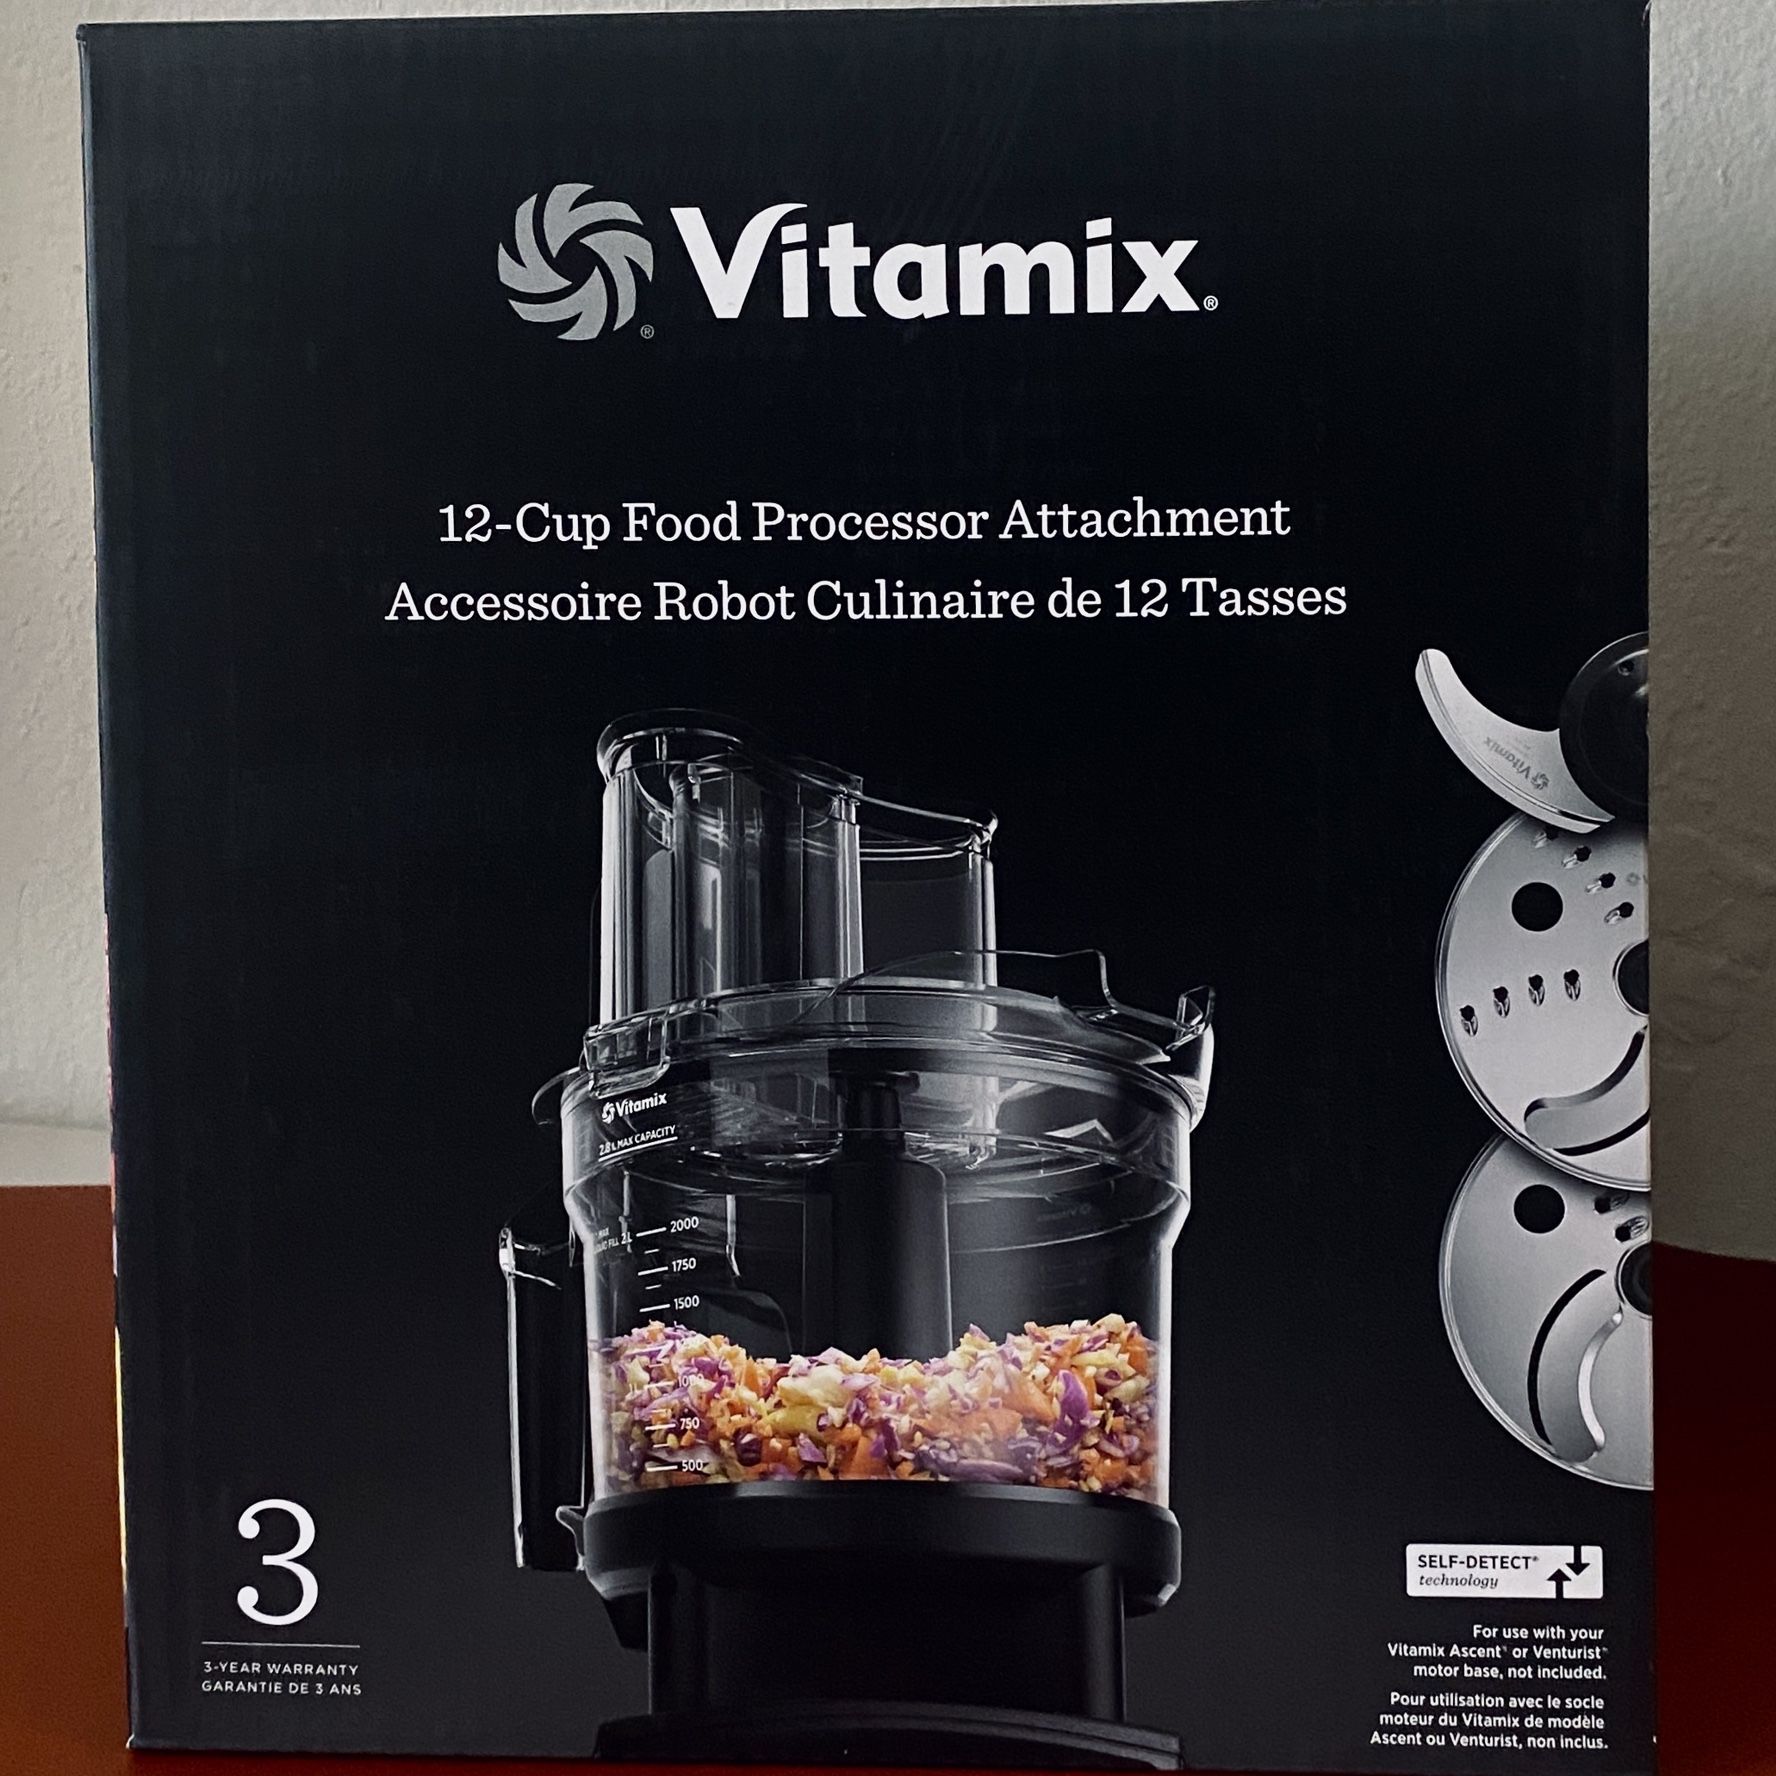 Vitamix 12-Cup Food Processor Attachment in Black